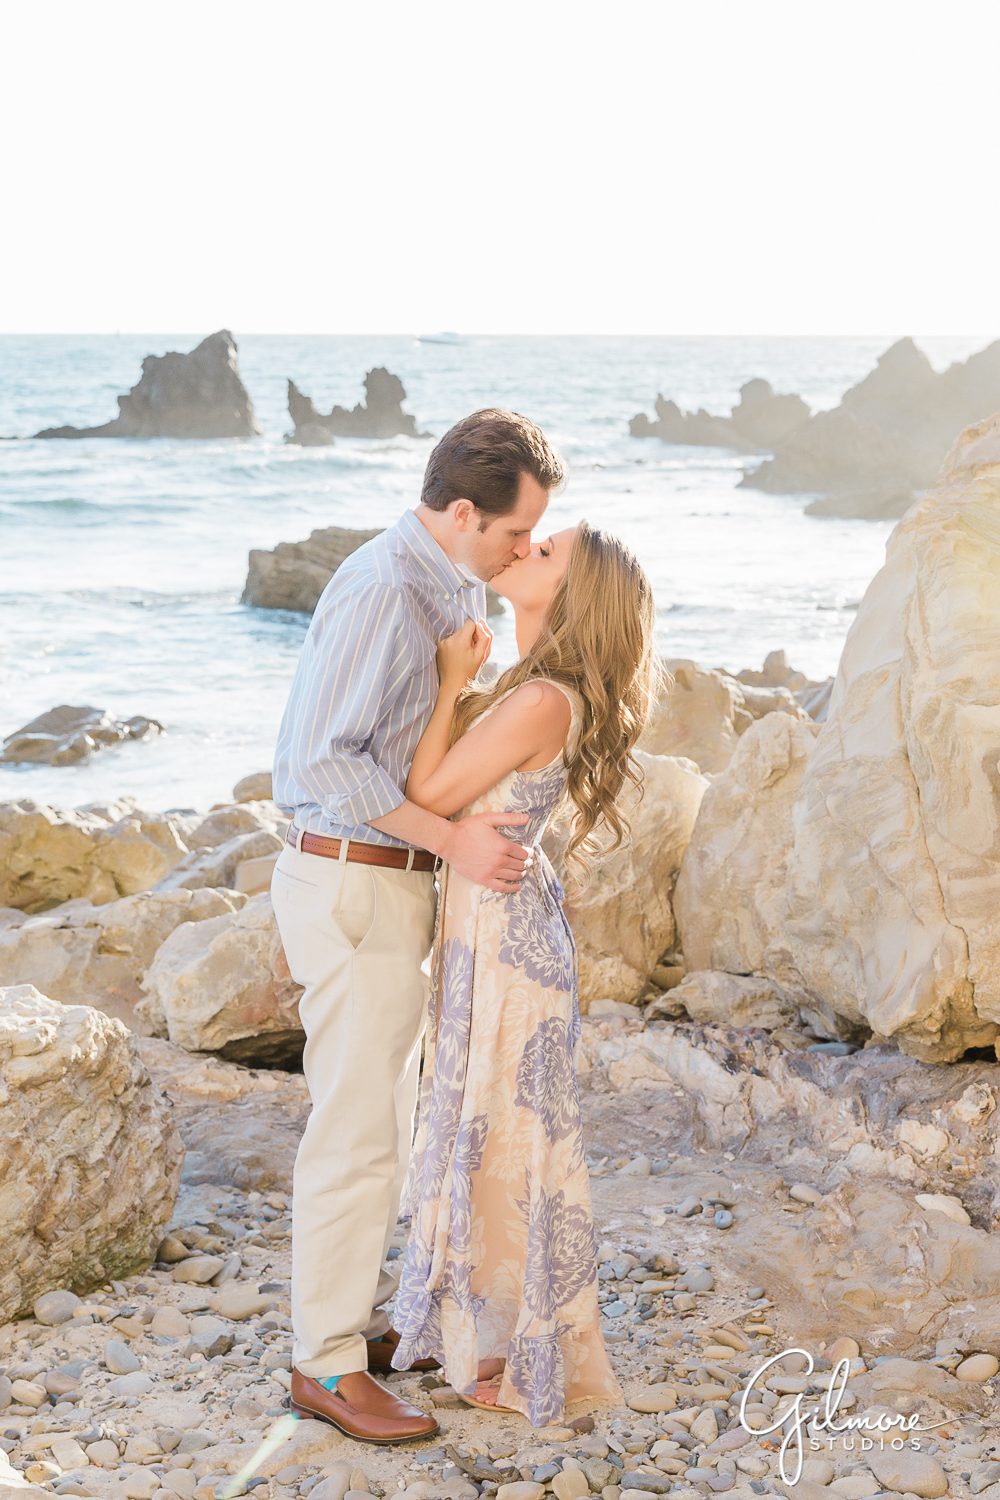 Newport Beach Engagement Session, engaged couple kissing, ocean, waves, rocks, sand, dress, portrait, natural light, sunset